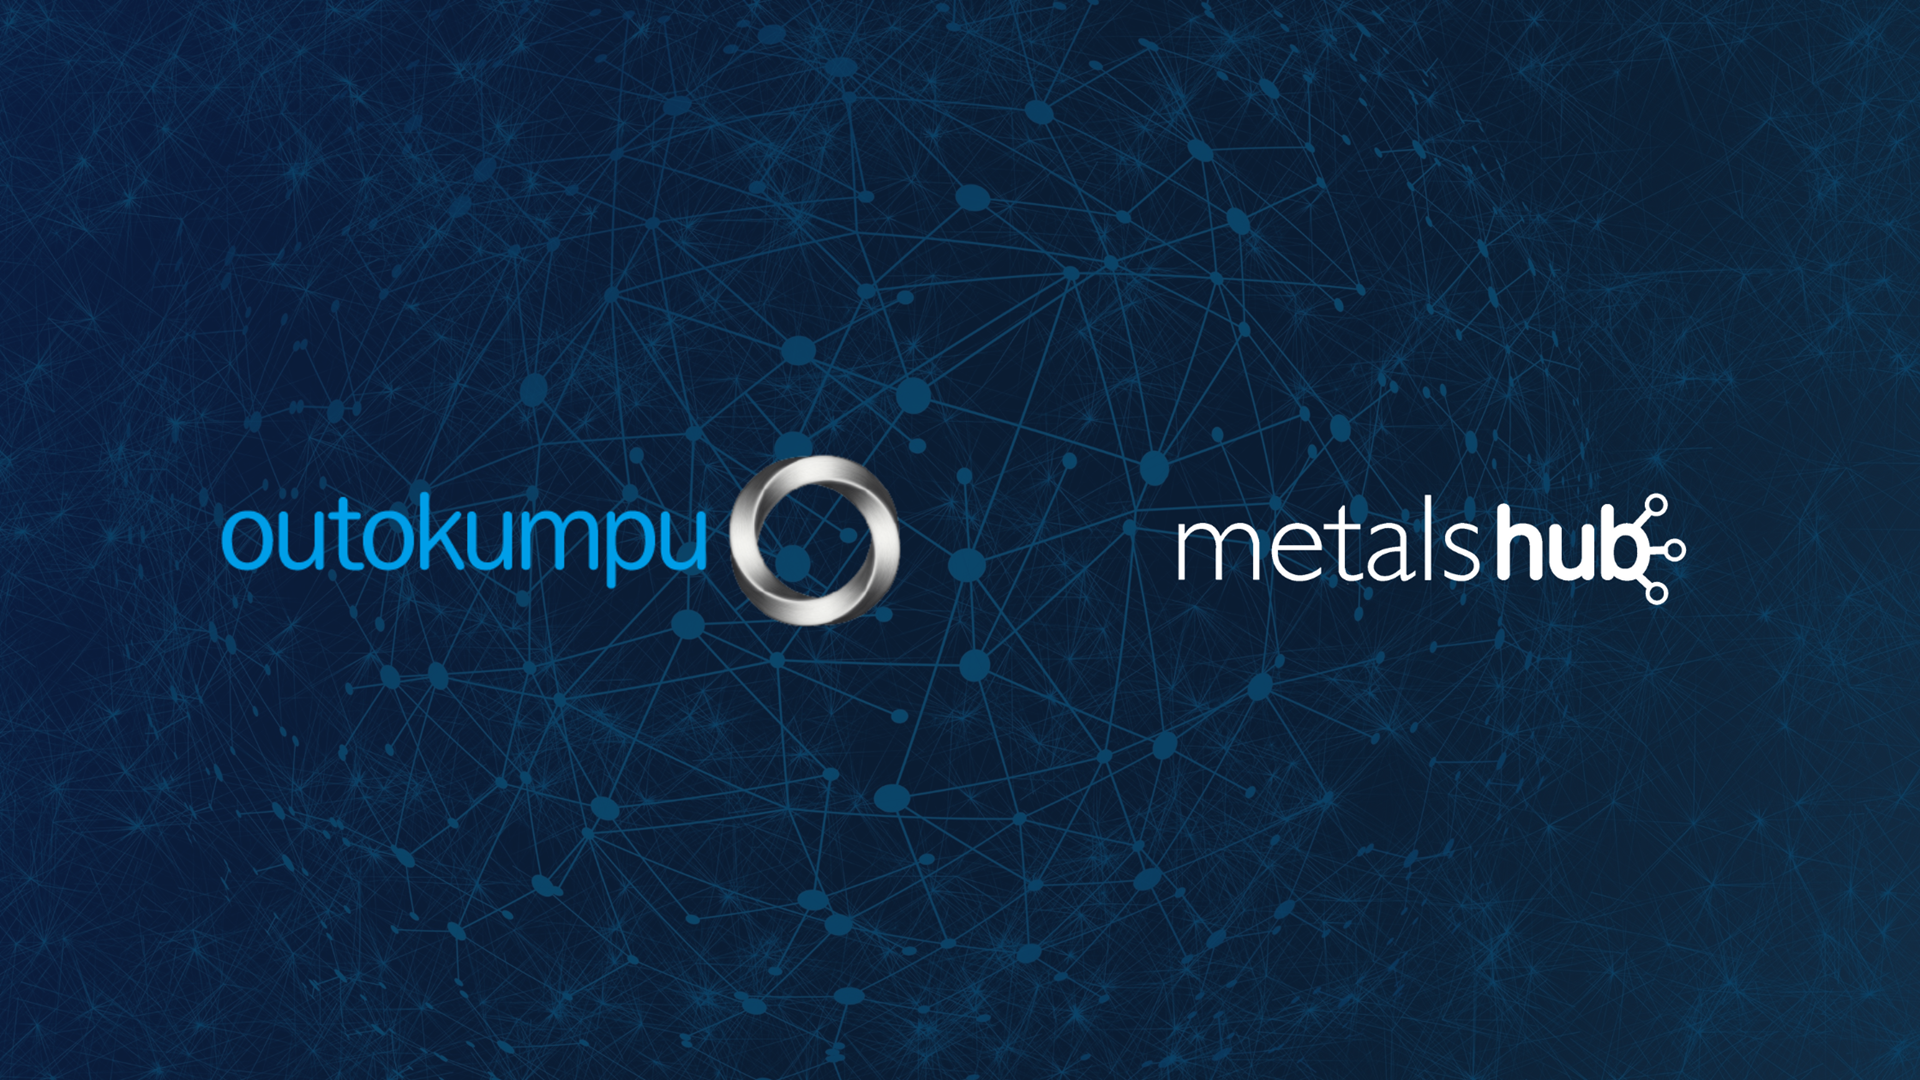 Outokumpu is expanding its digital collaboration with Metalshub